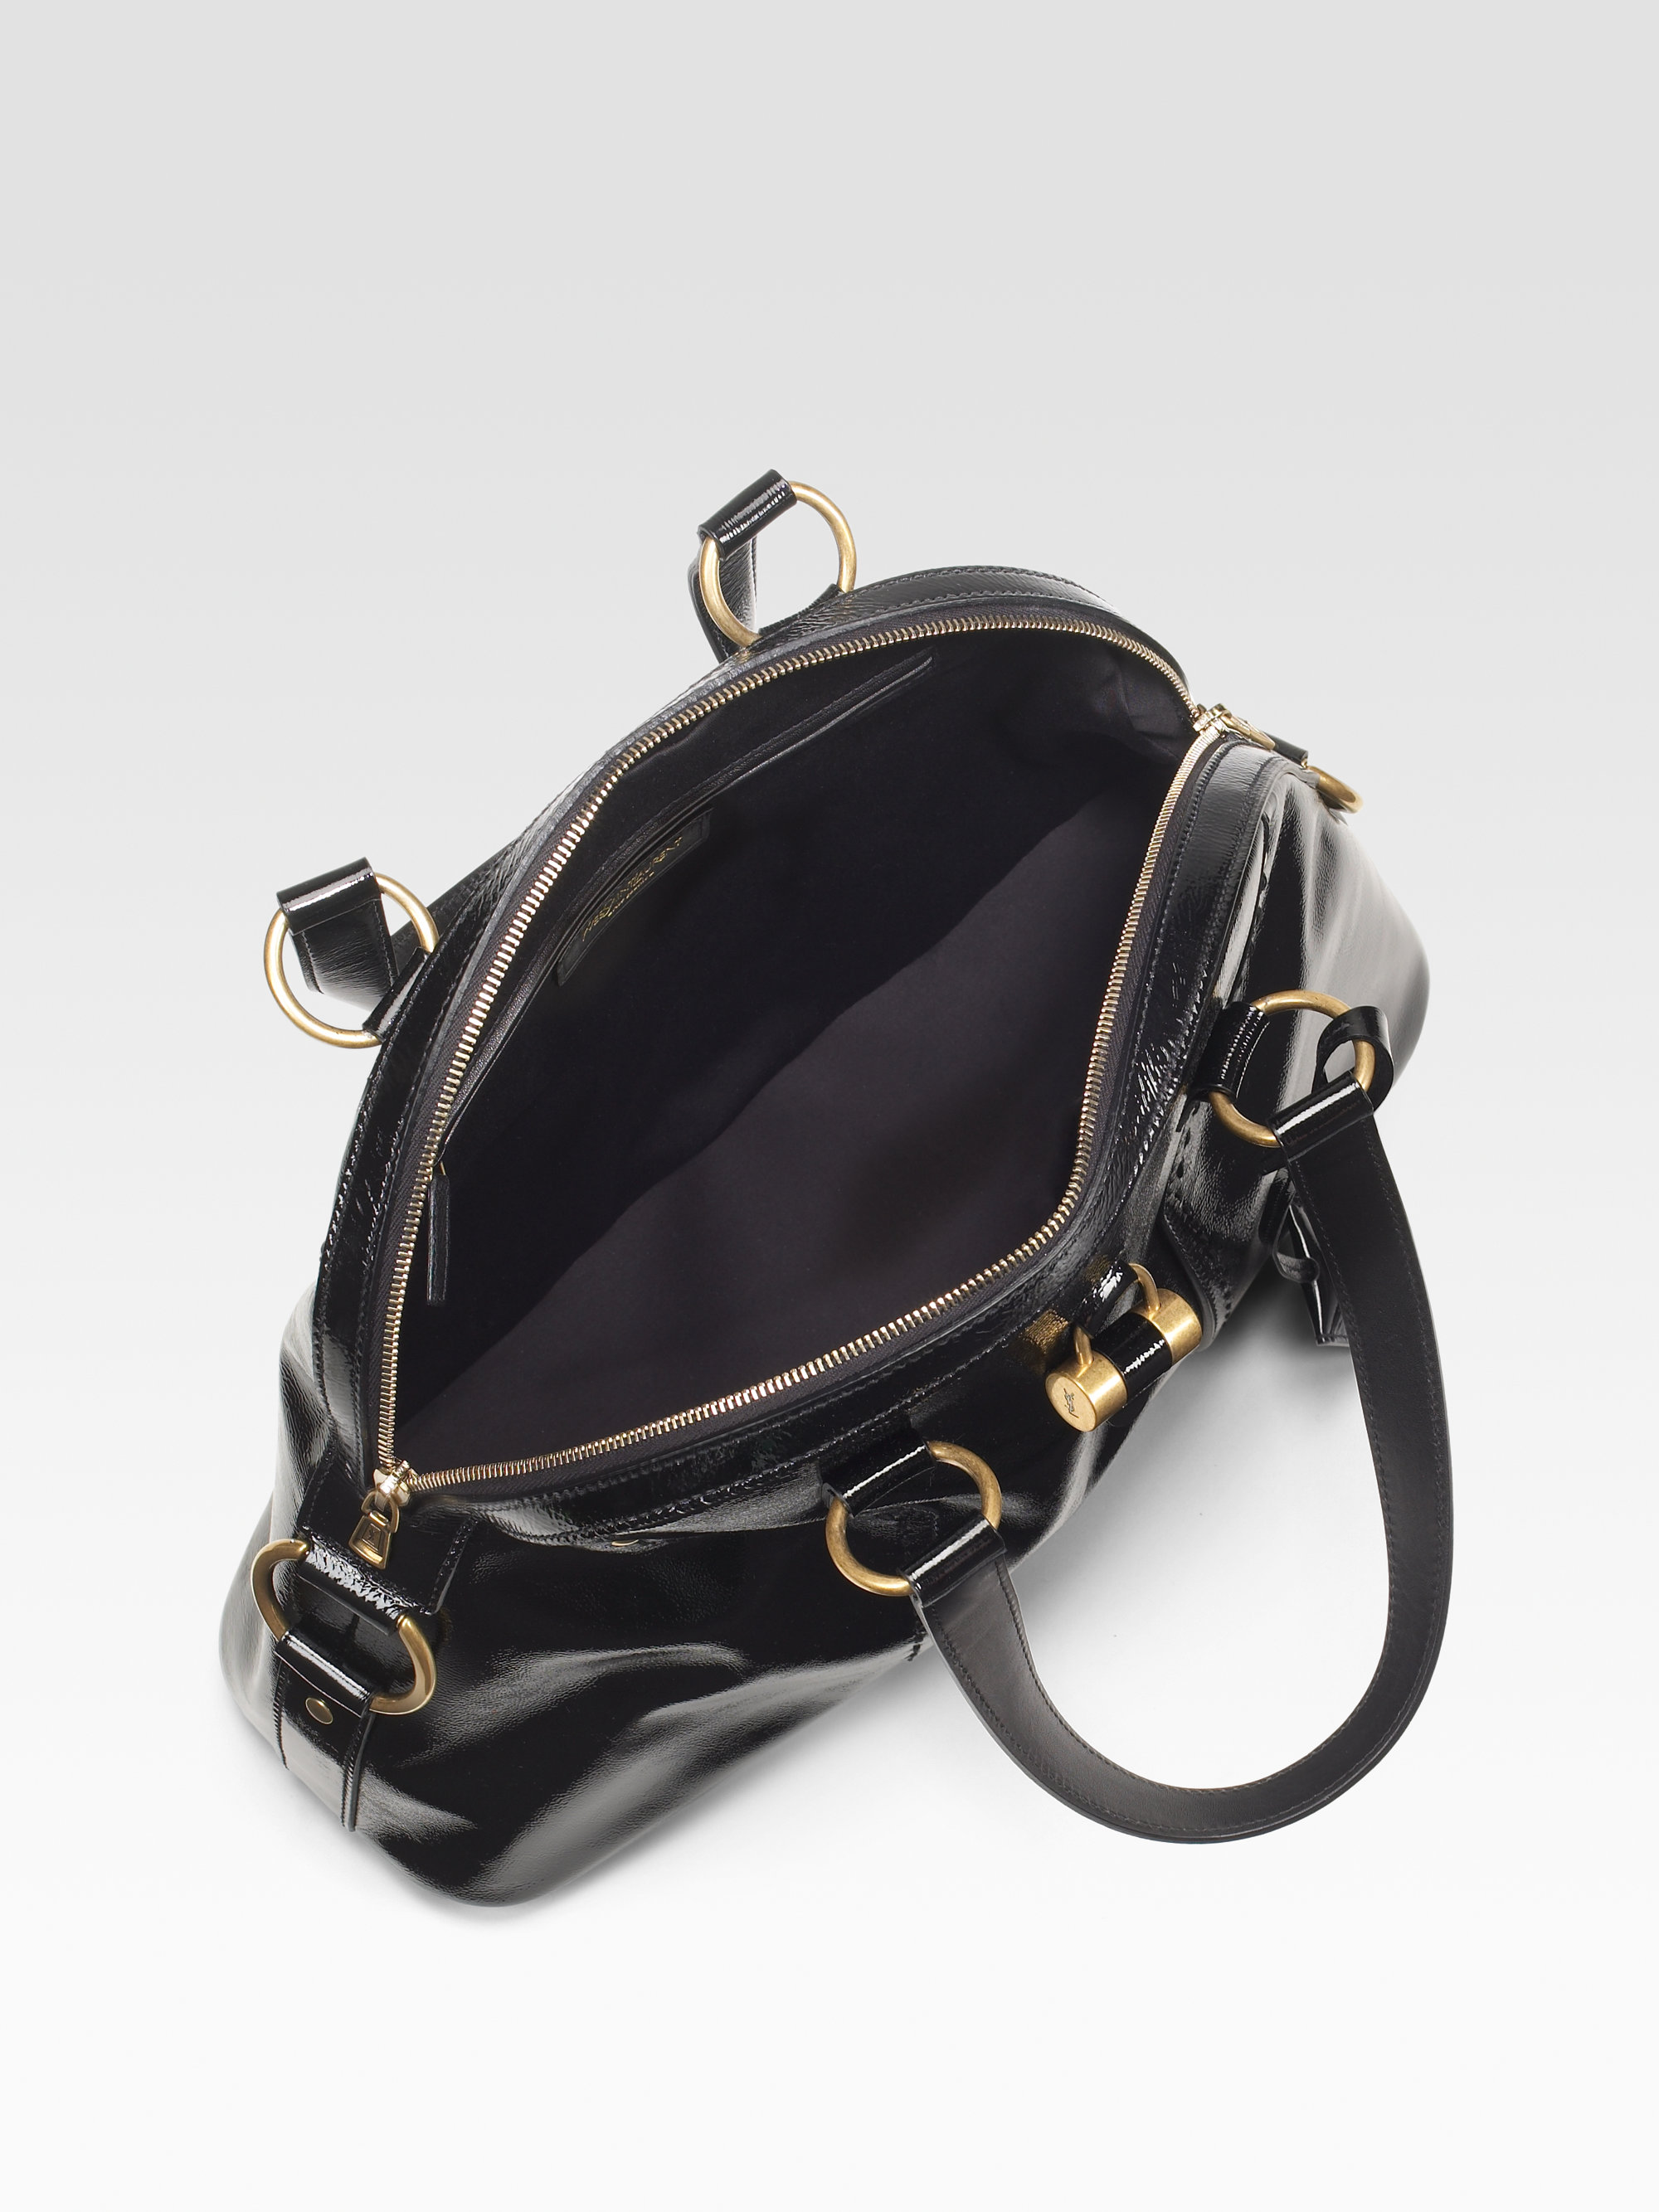 Saint laurent Patent Leather Muse Bag in Black | Lyst